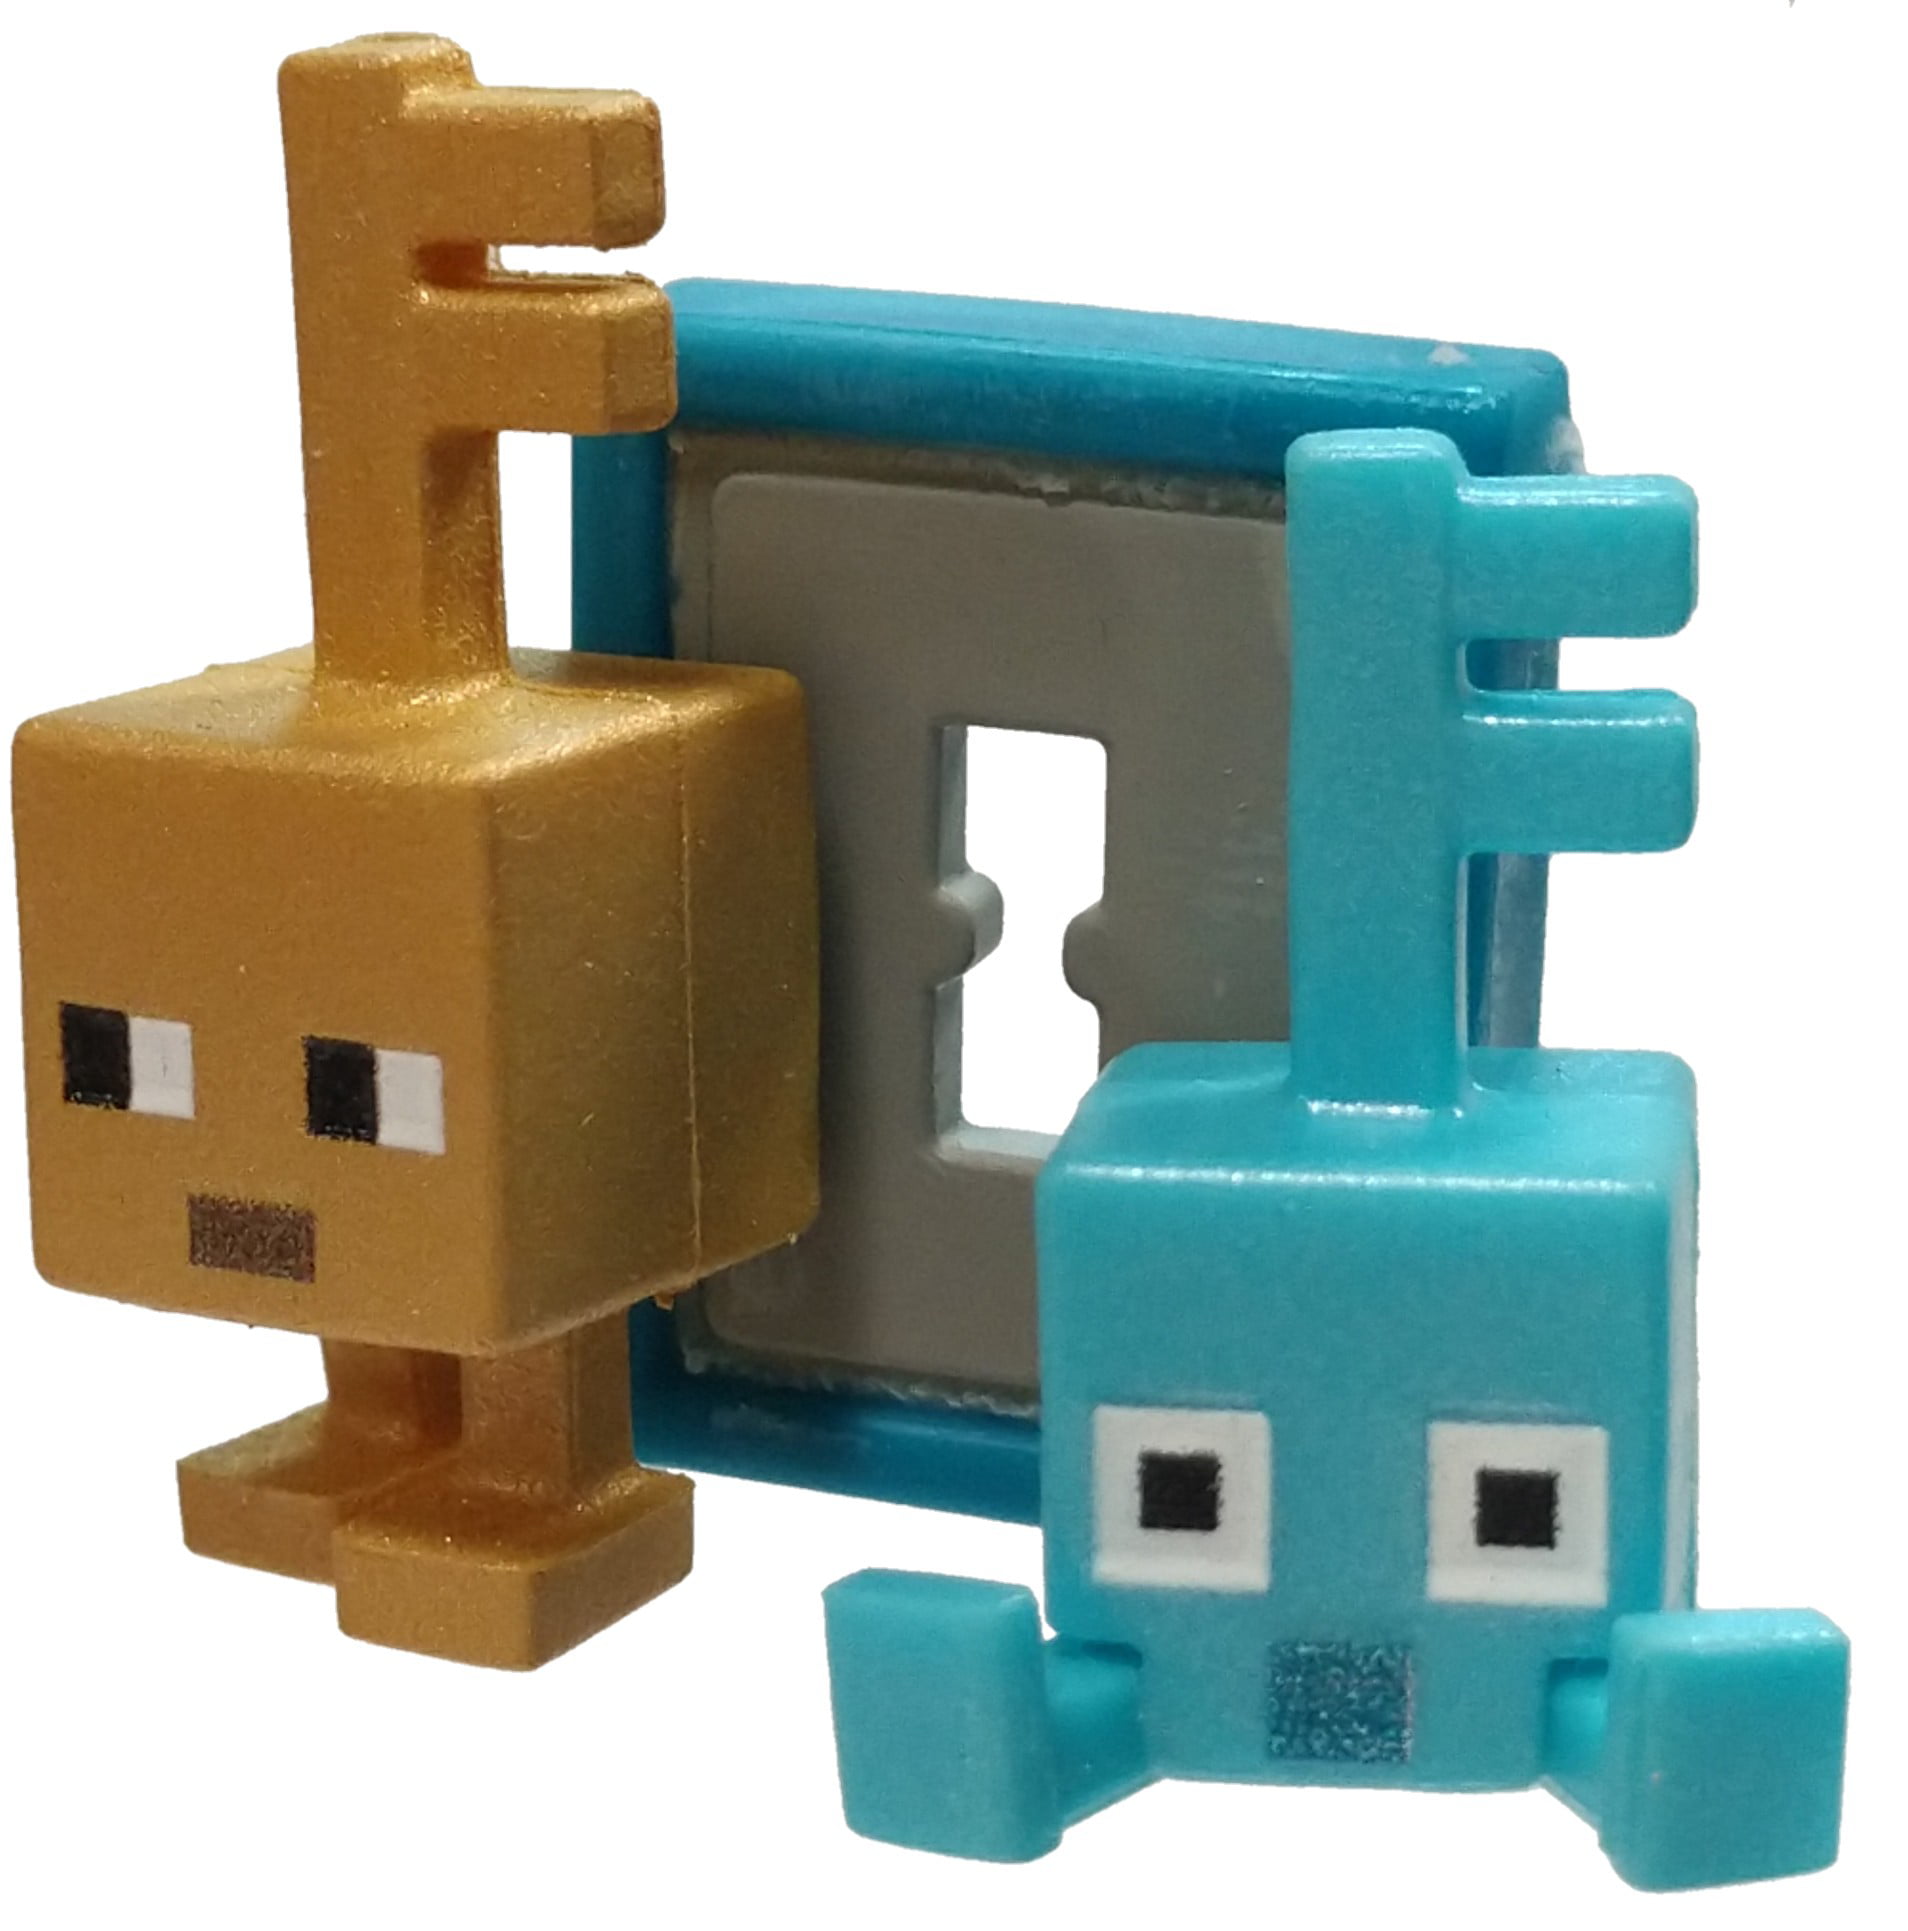 Minecraft Dungeon Series 20 Key Golems Minifigure [No Packaging]